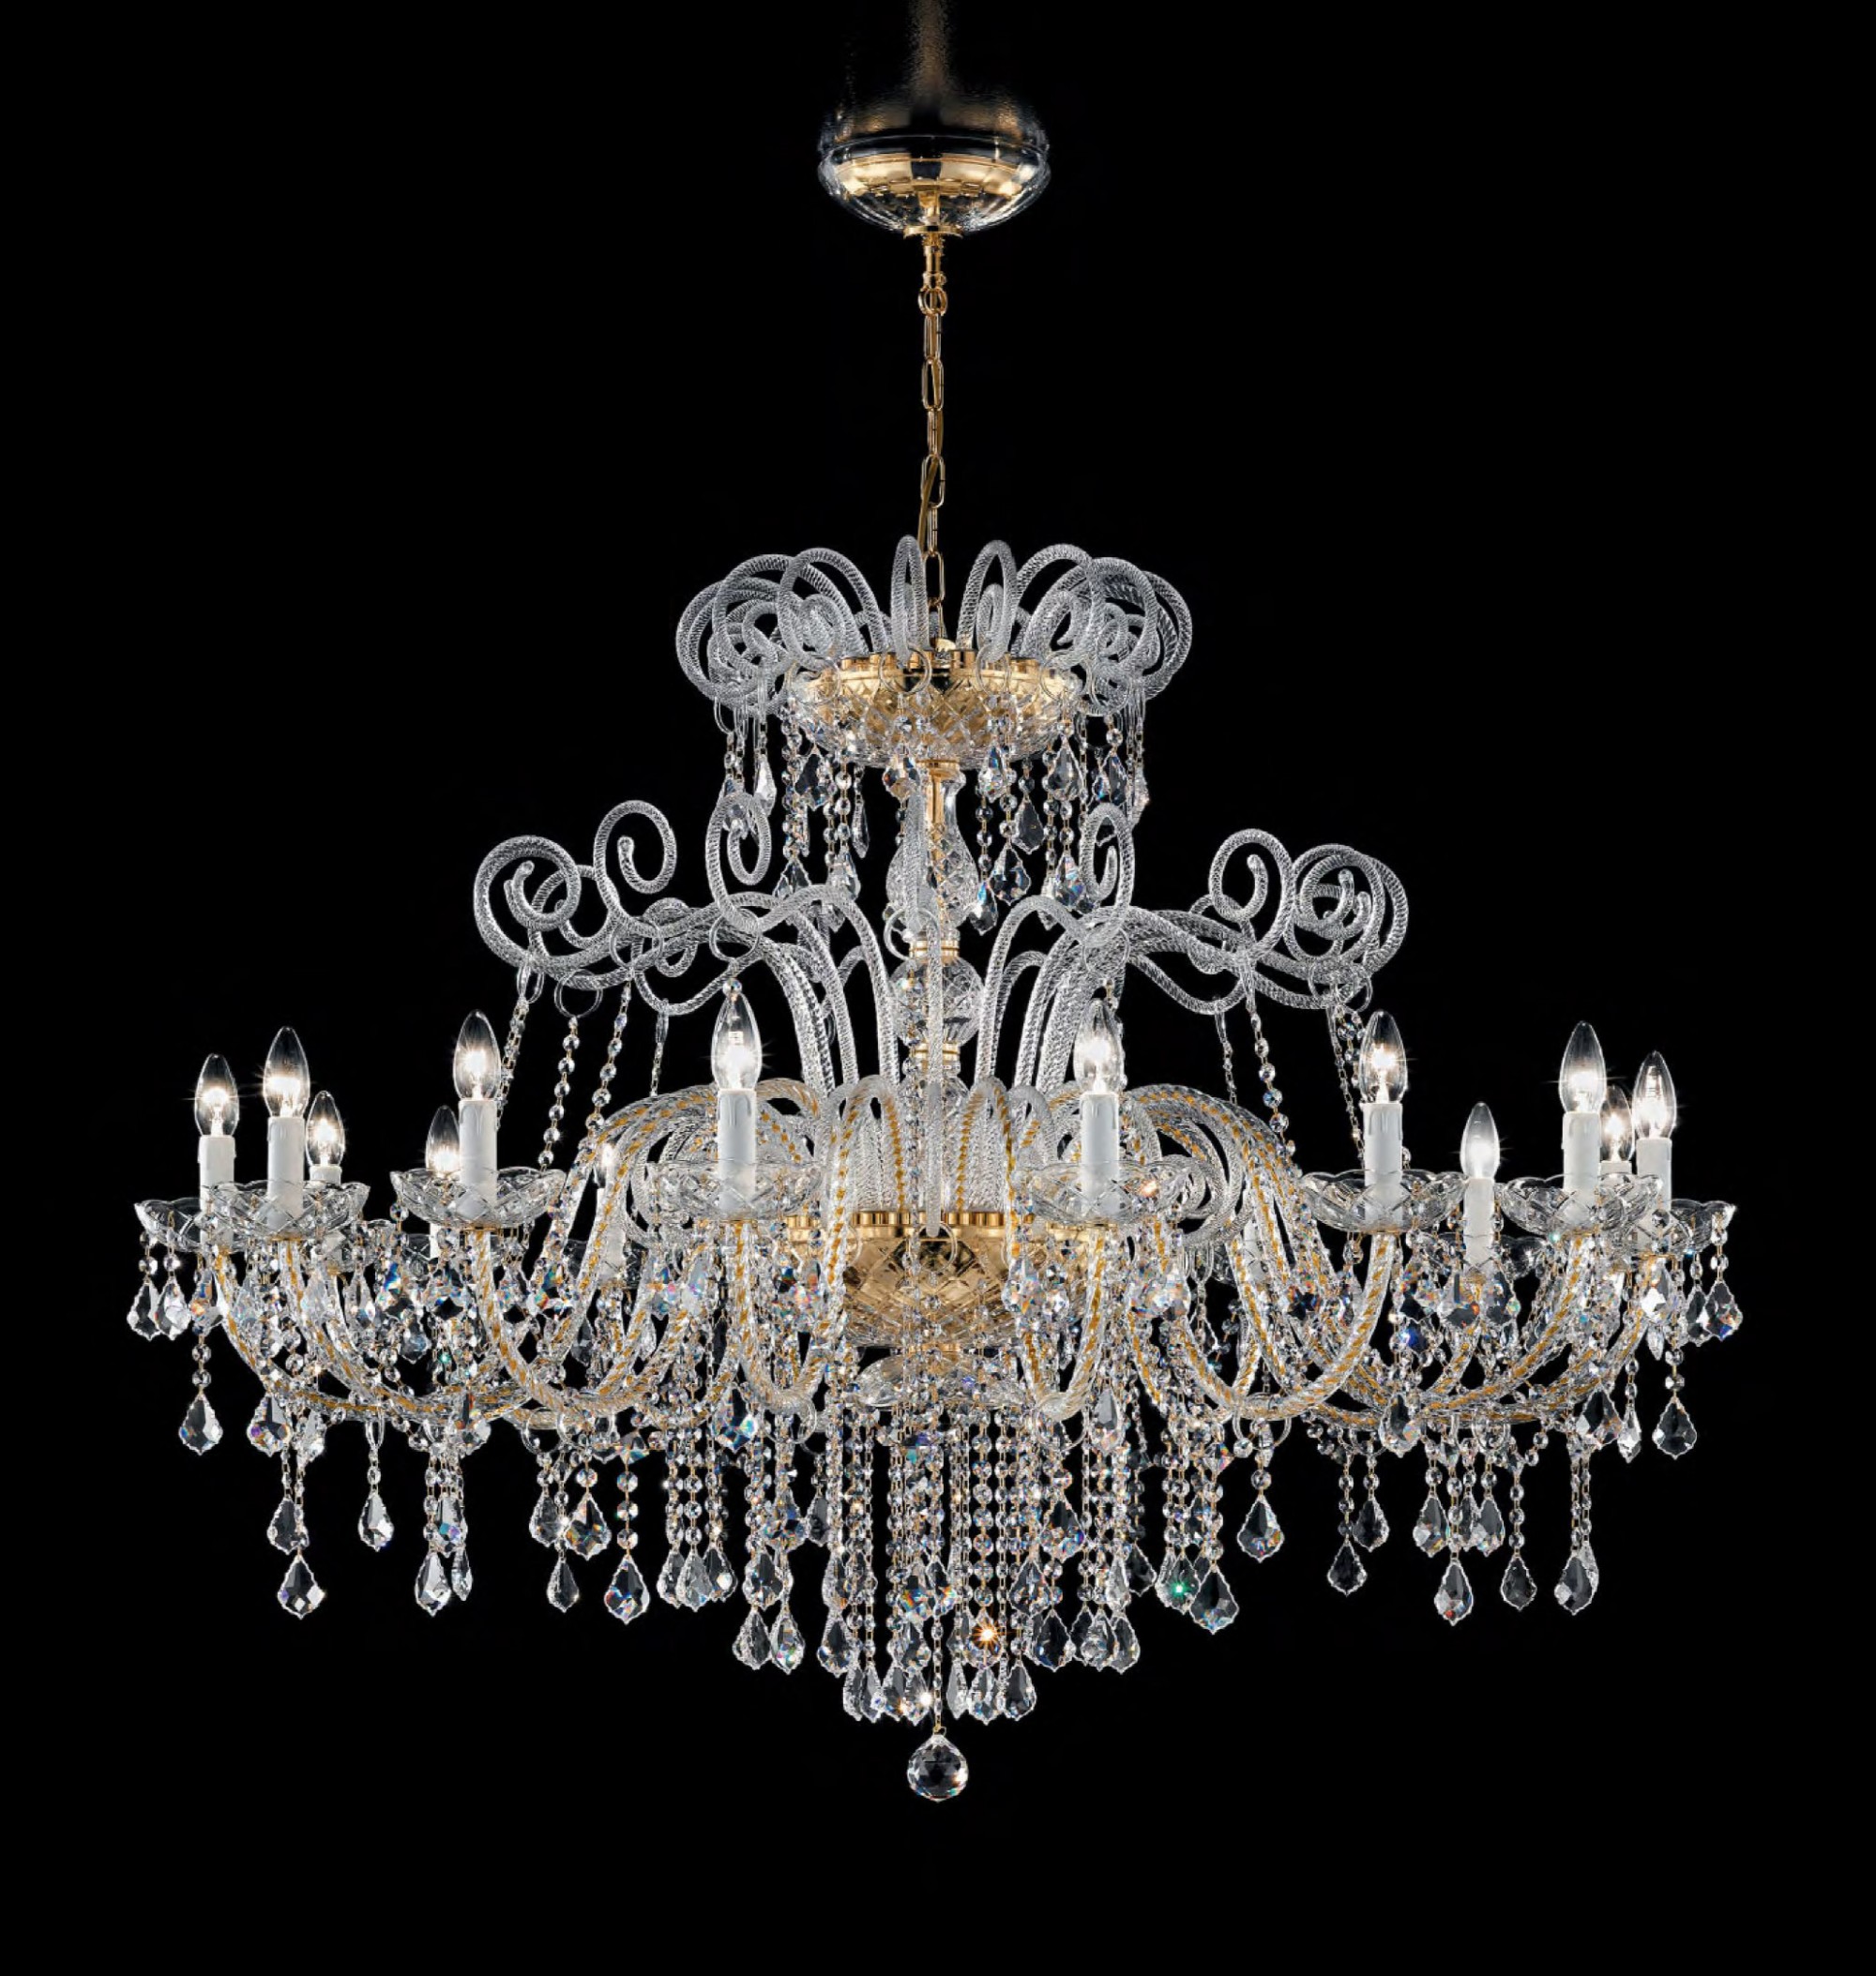 Antique style Murano glass Swarovski crystals chandelier SYL947K16